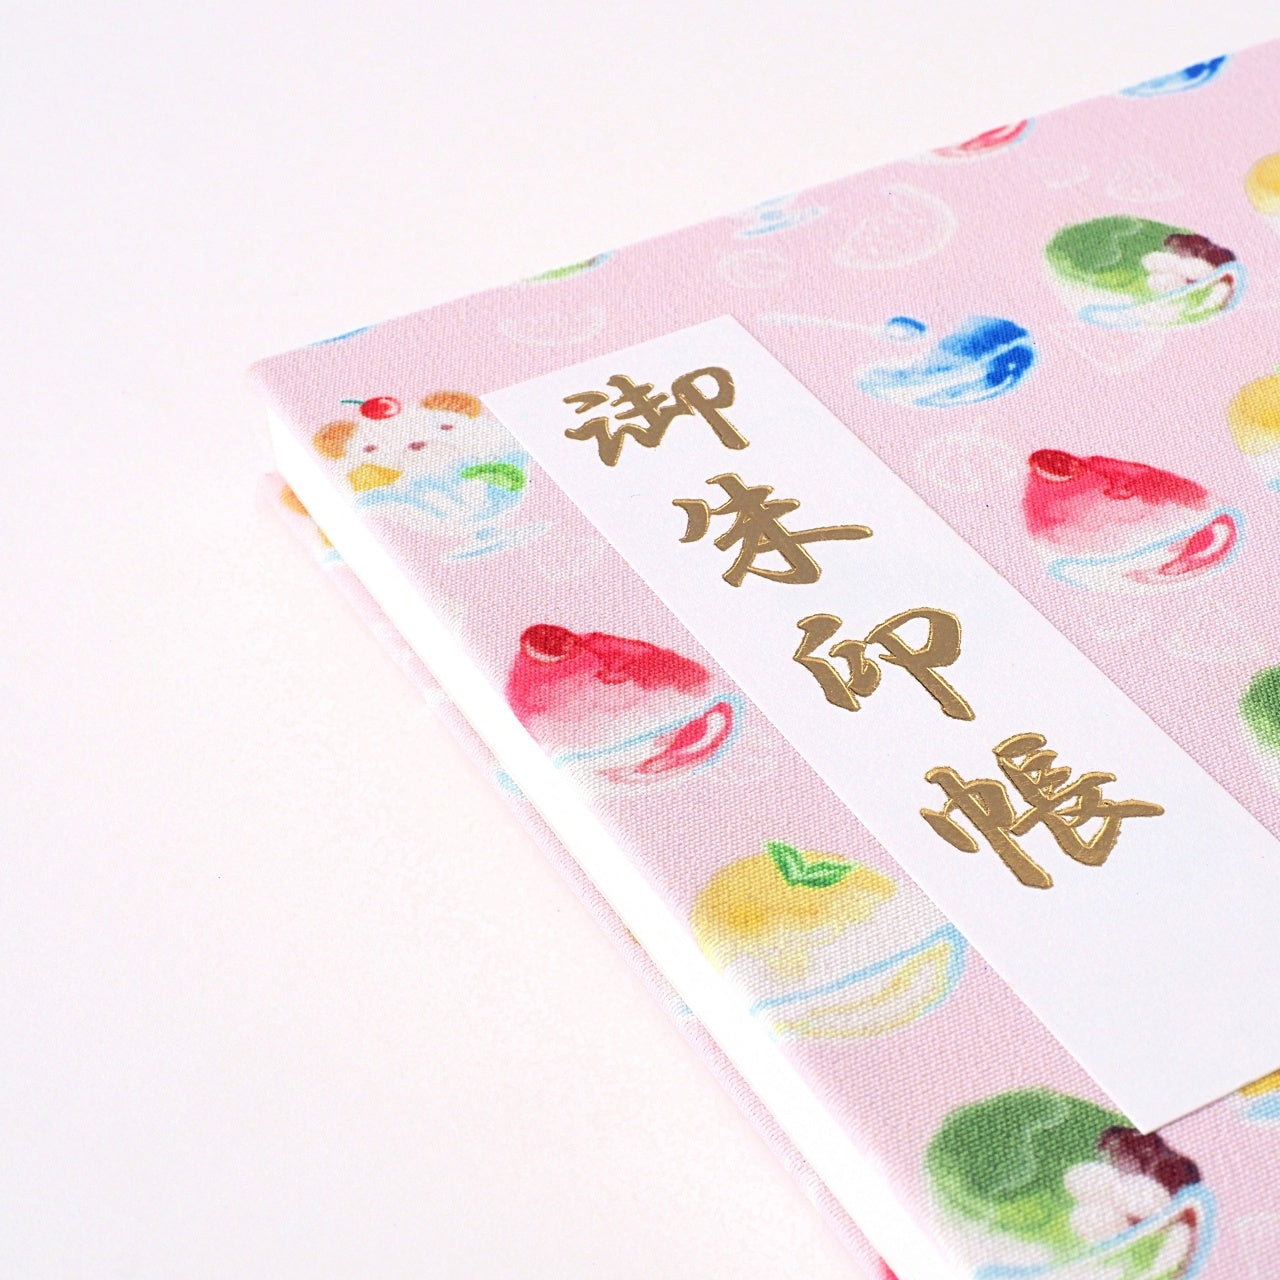 Goshuin book “Yu” shaved ice/strawberry